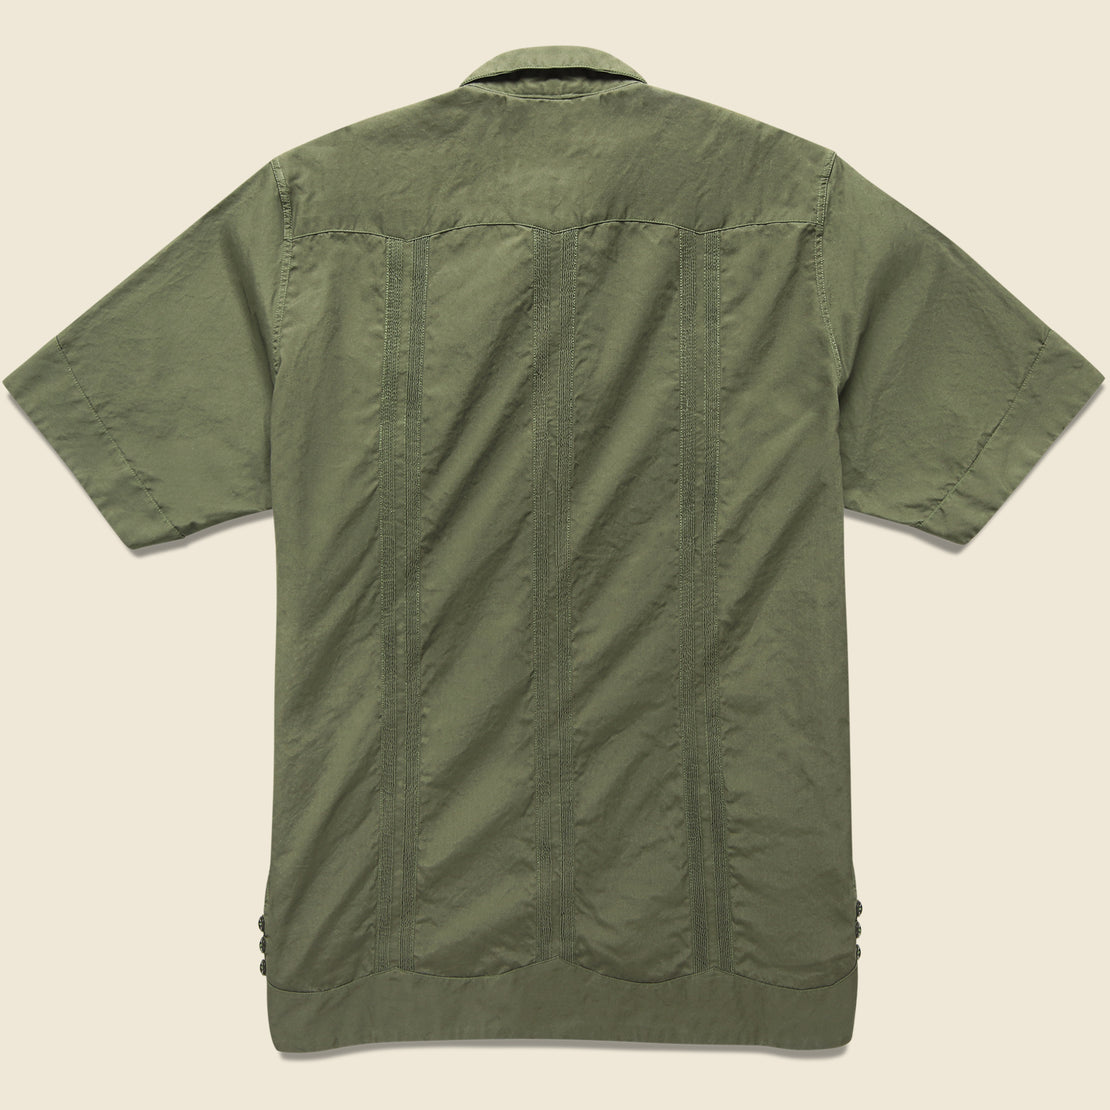 Vancloth Poplin Guayabera Shirt - Olive - Monitaly - STAG Provisions - Tops - S/S Woven - Solid